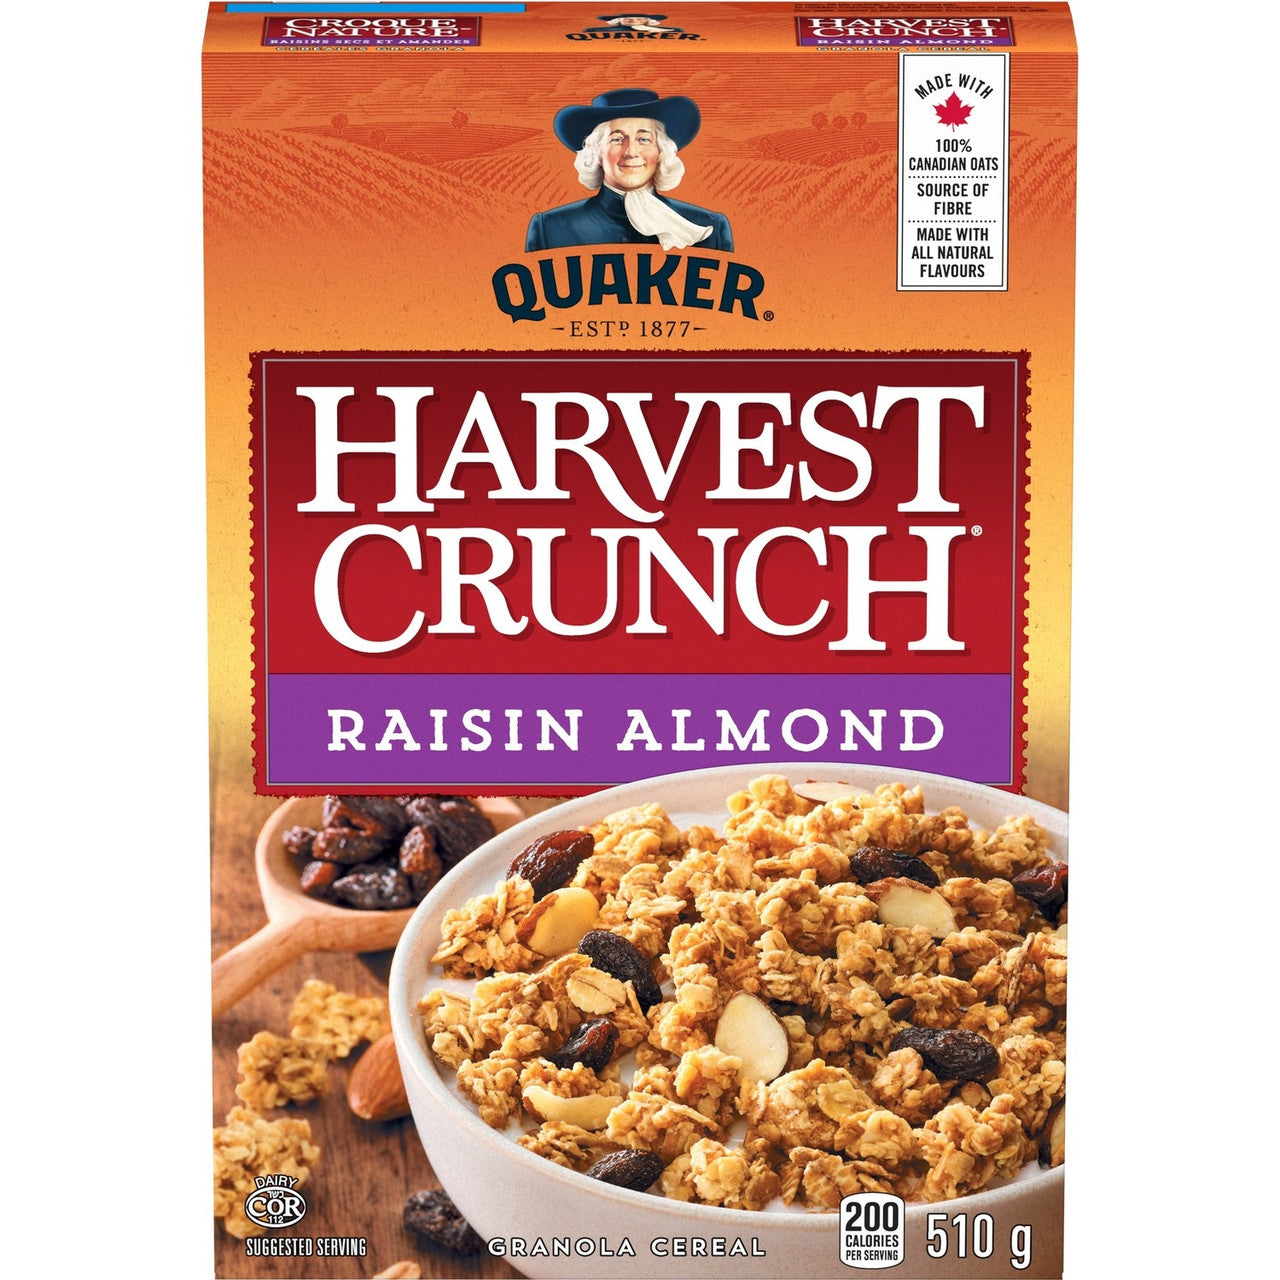 Quaker Harvest Crunch Raisin Almond, 510g/17.8 oz. Box(Imported from Canada)